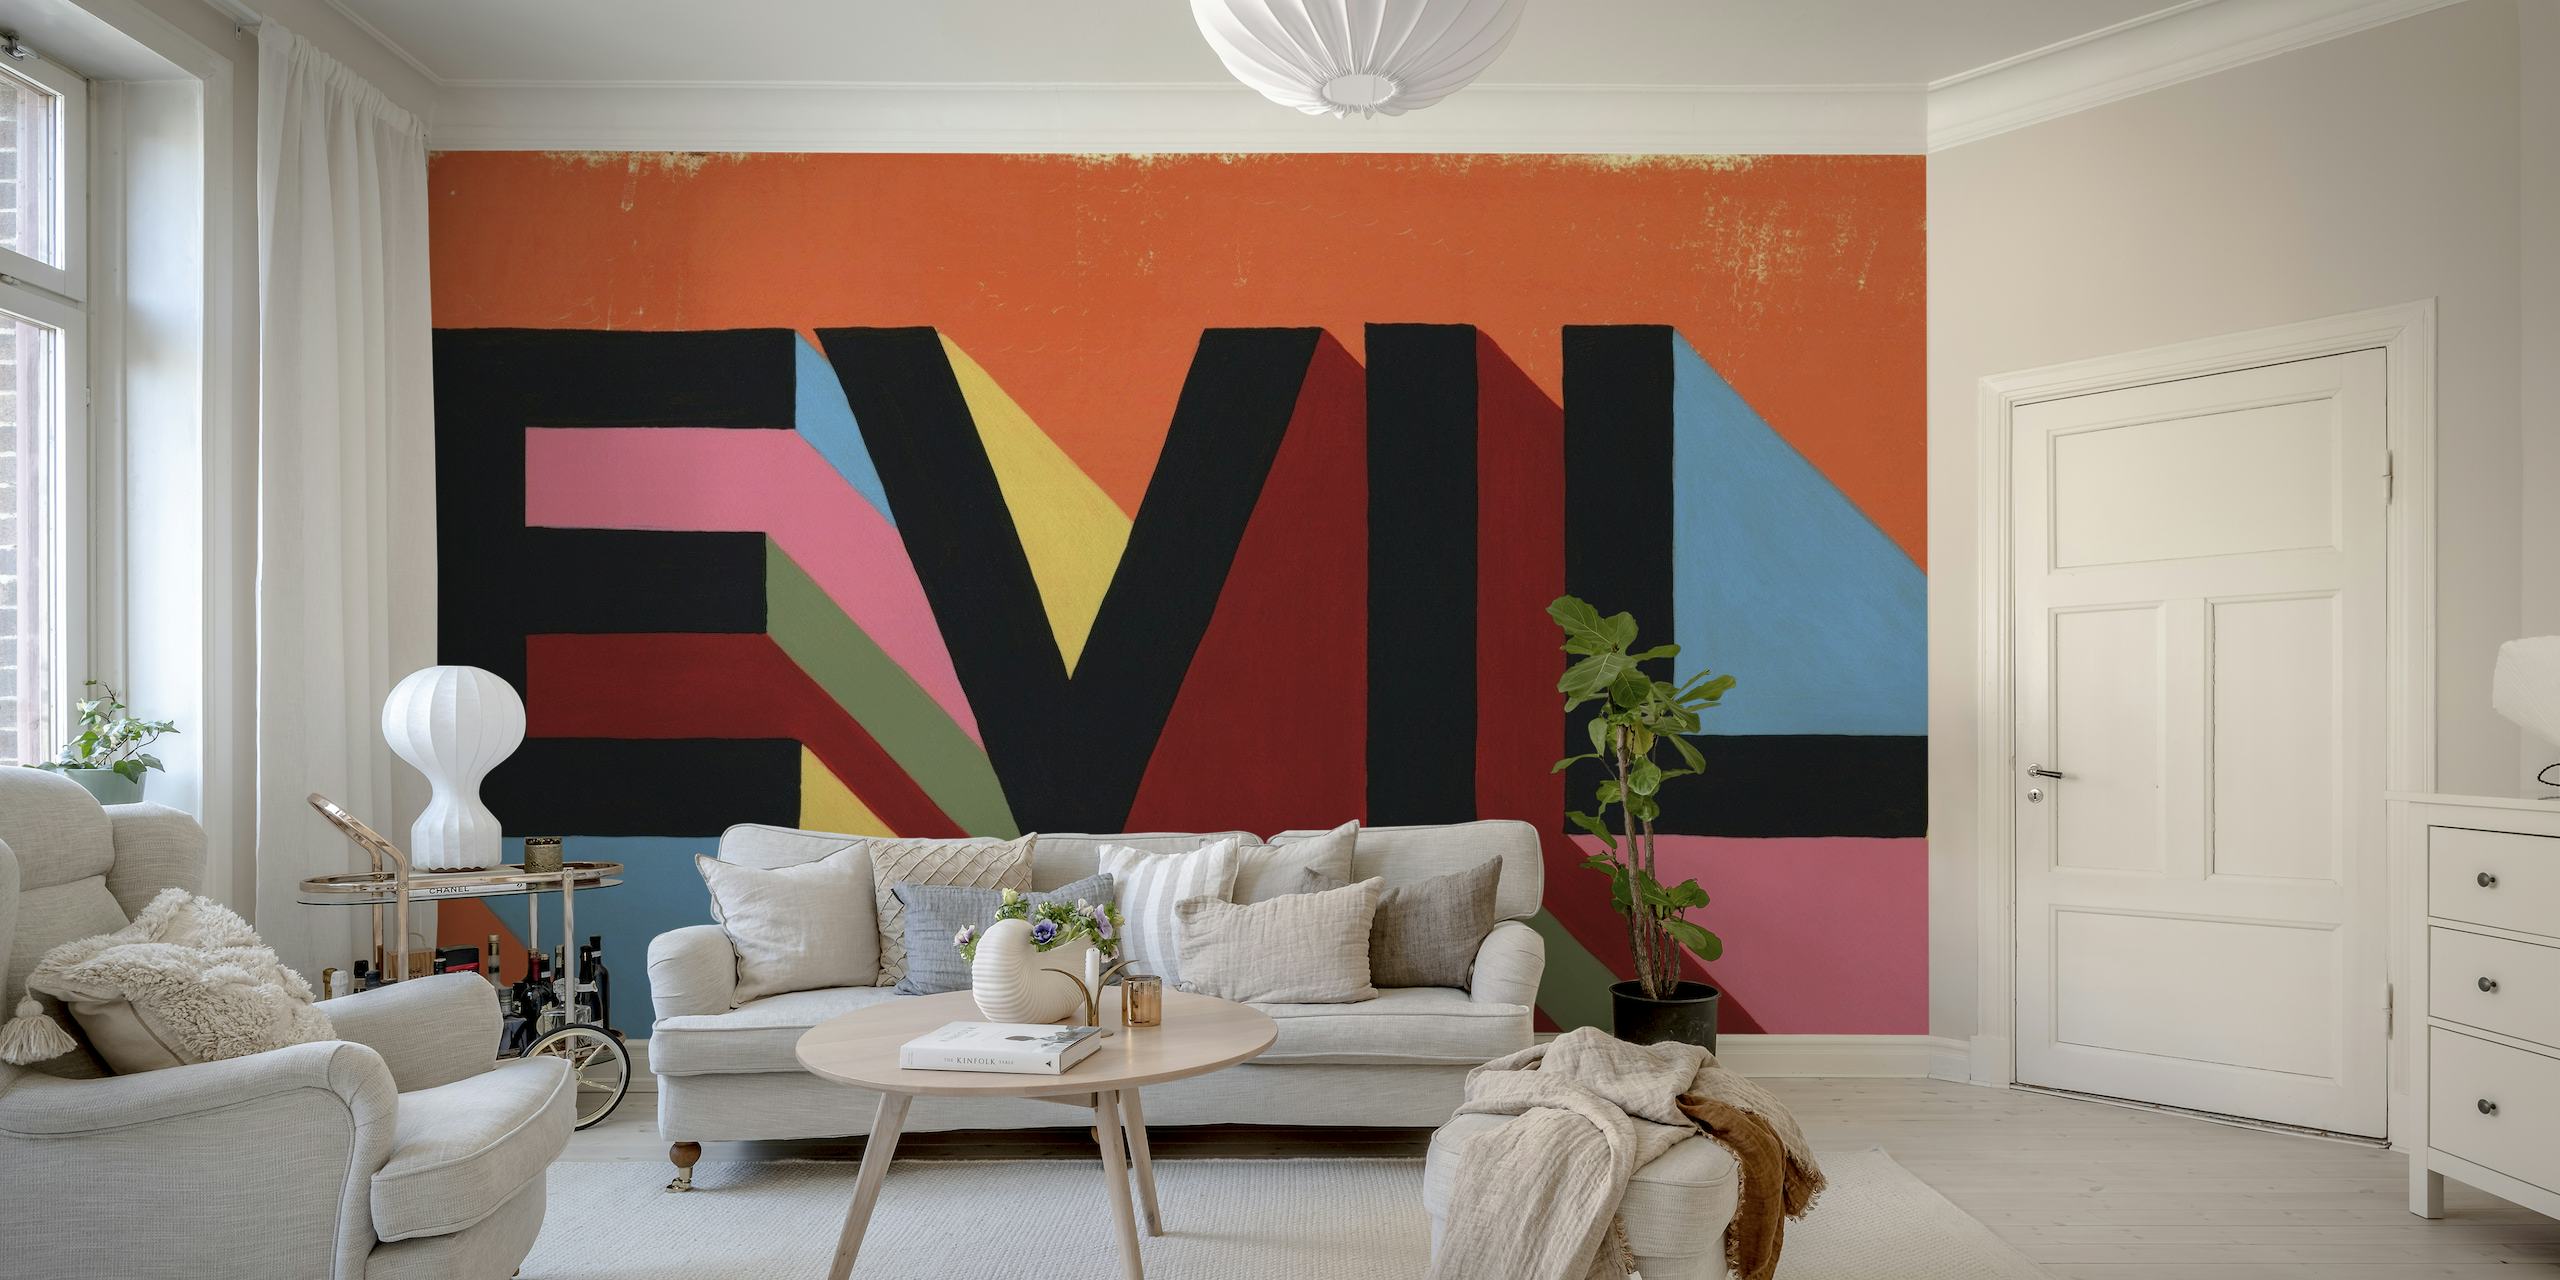 Evil wallpaper